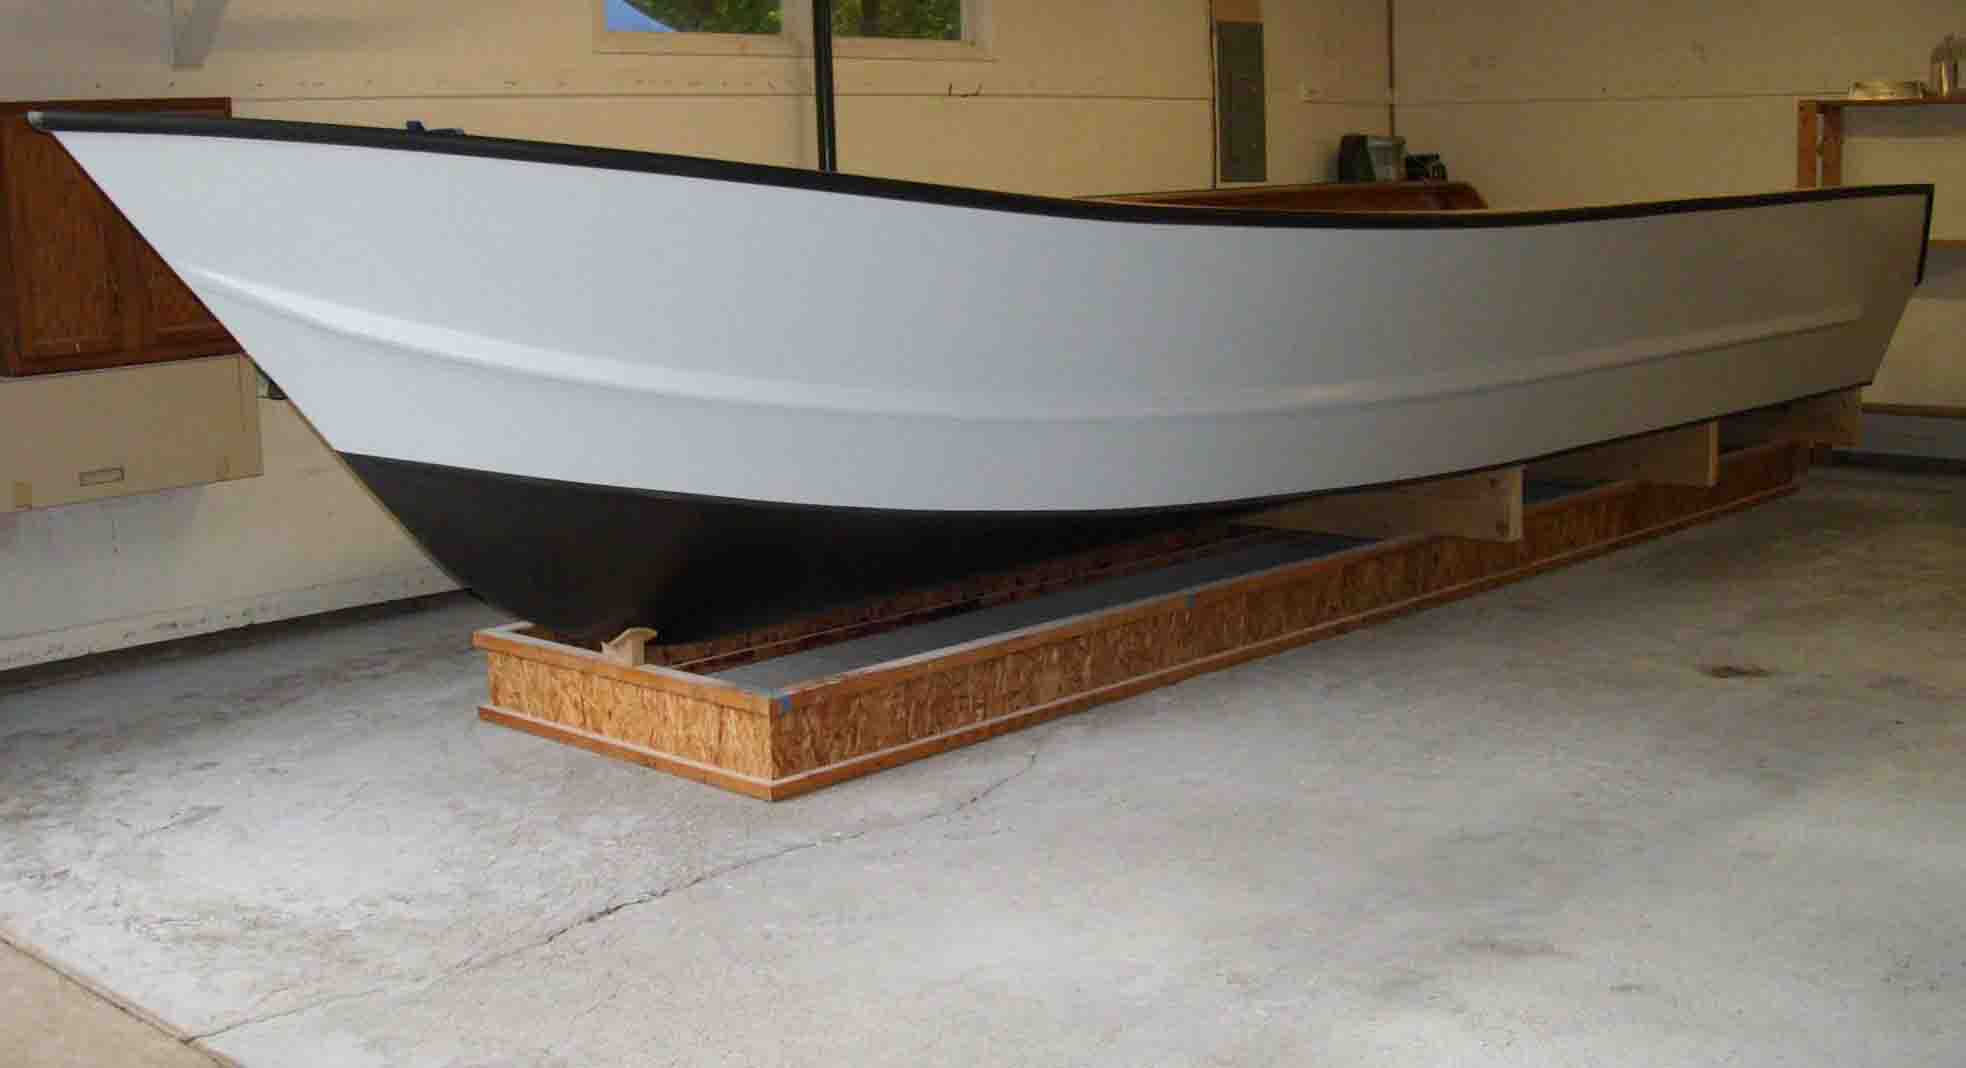 Diy Plywood Boat Plans - Diy (Do It Your Self)